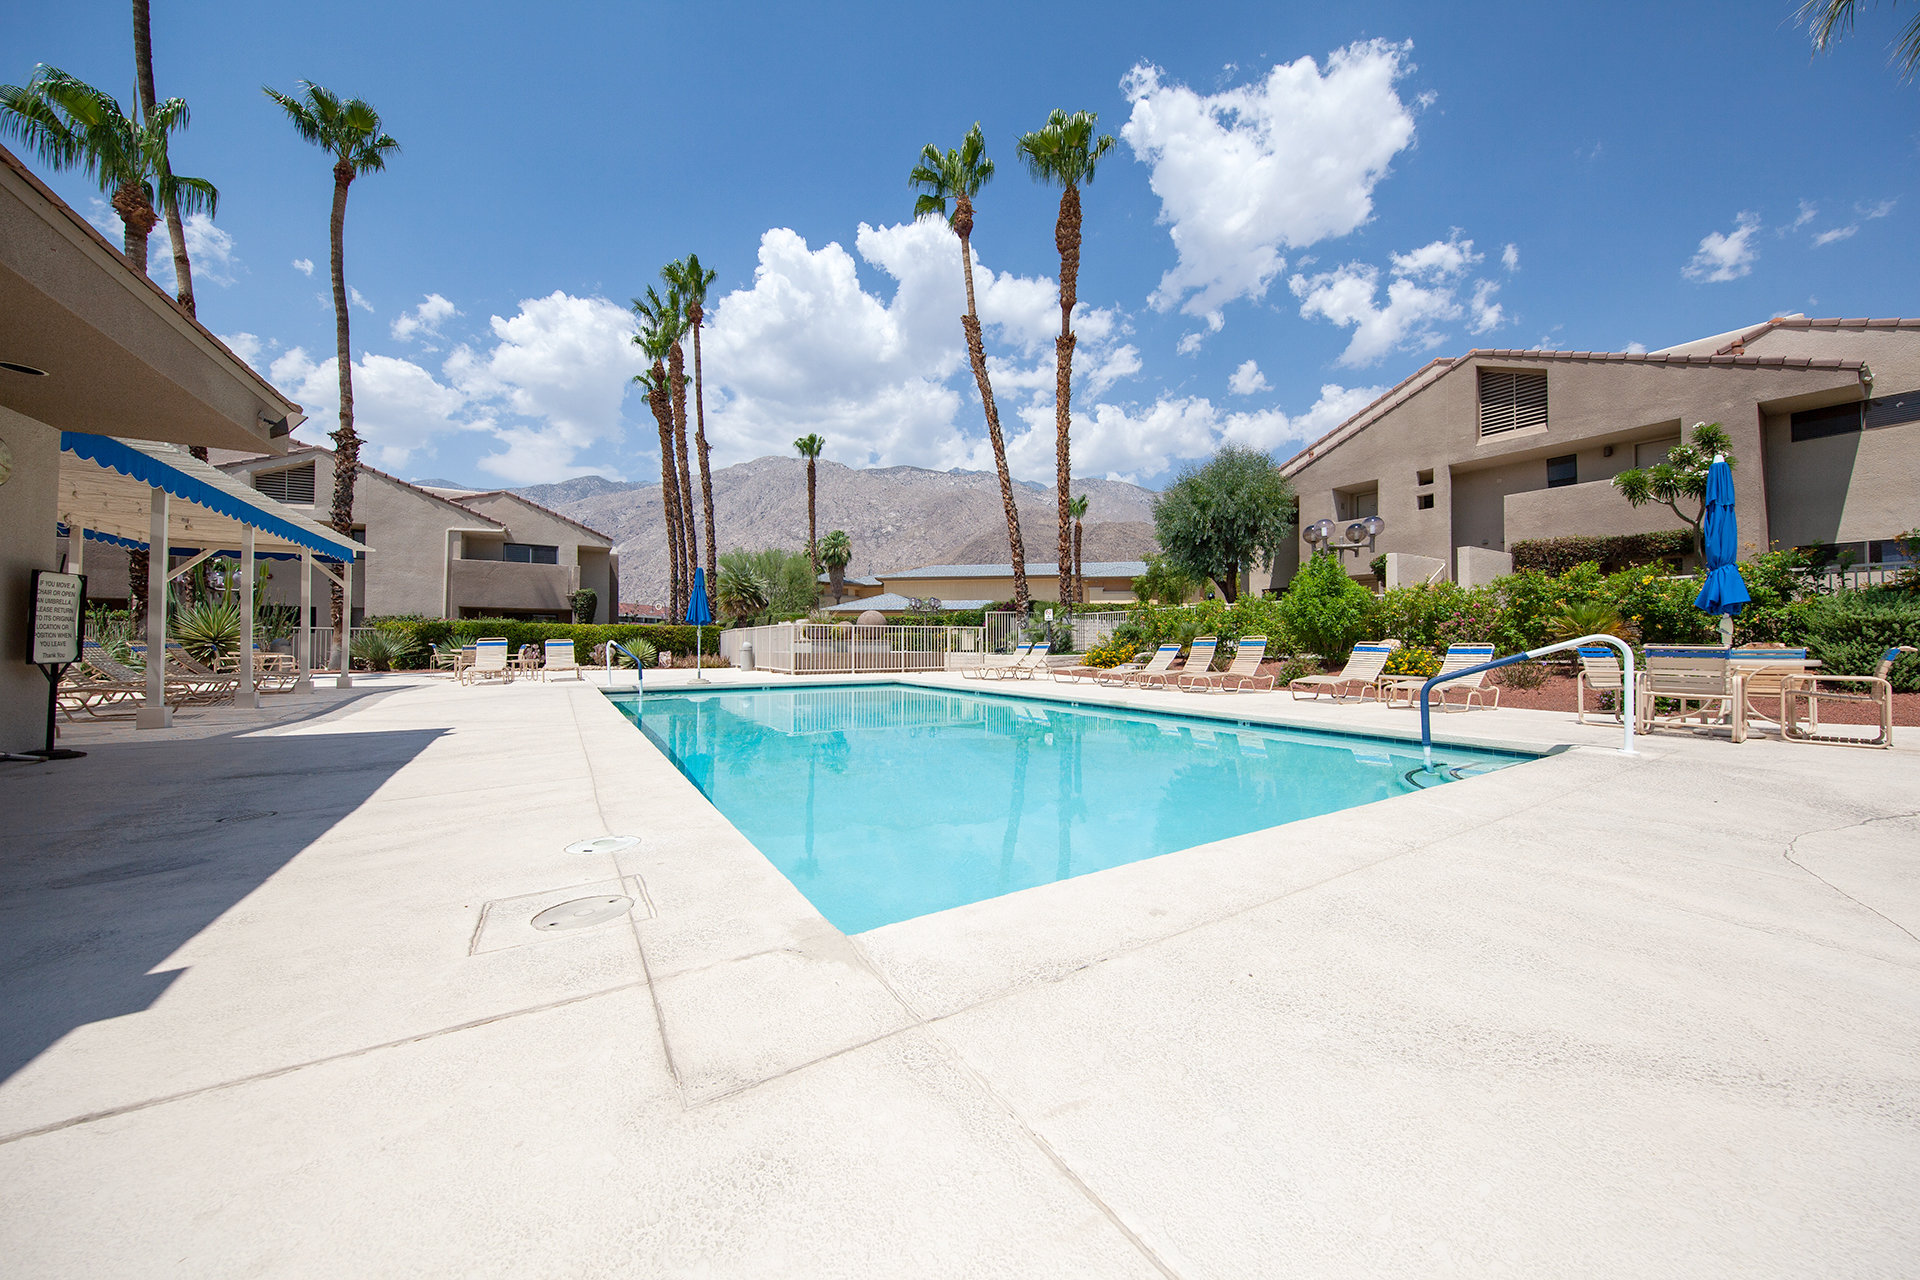 A Palm Springs condo complex